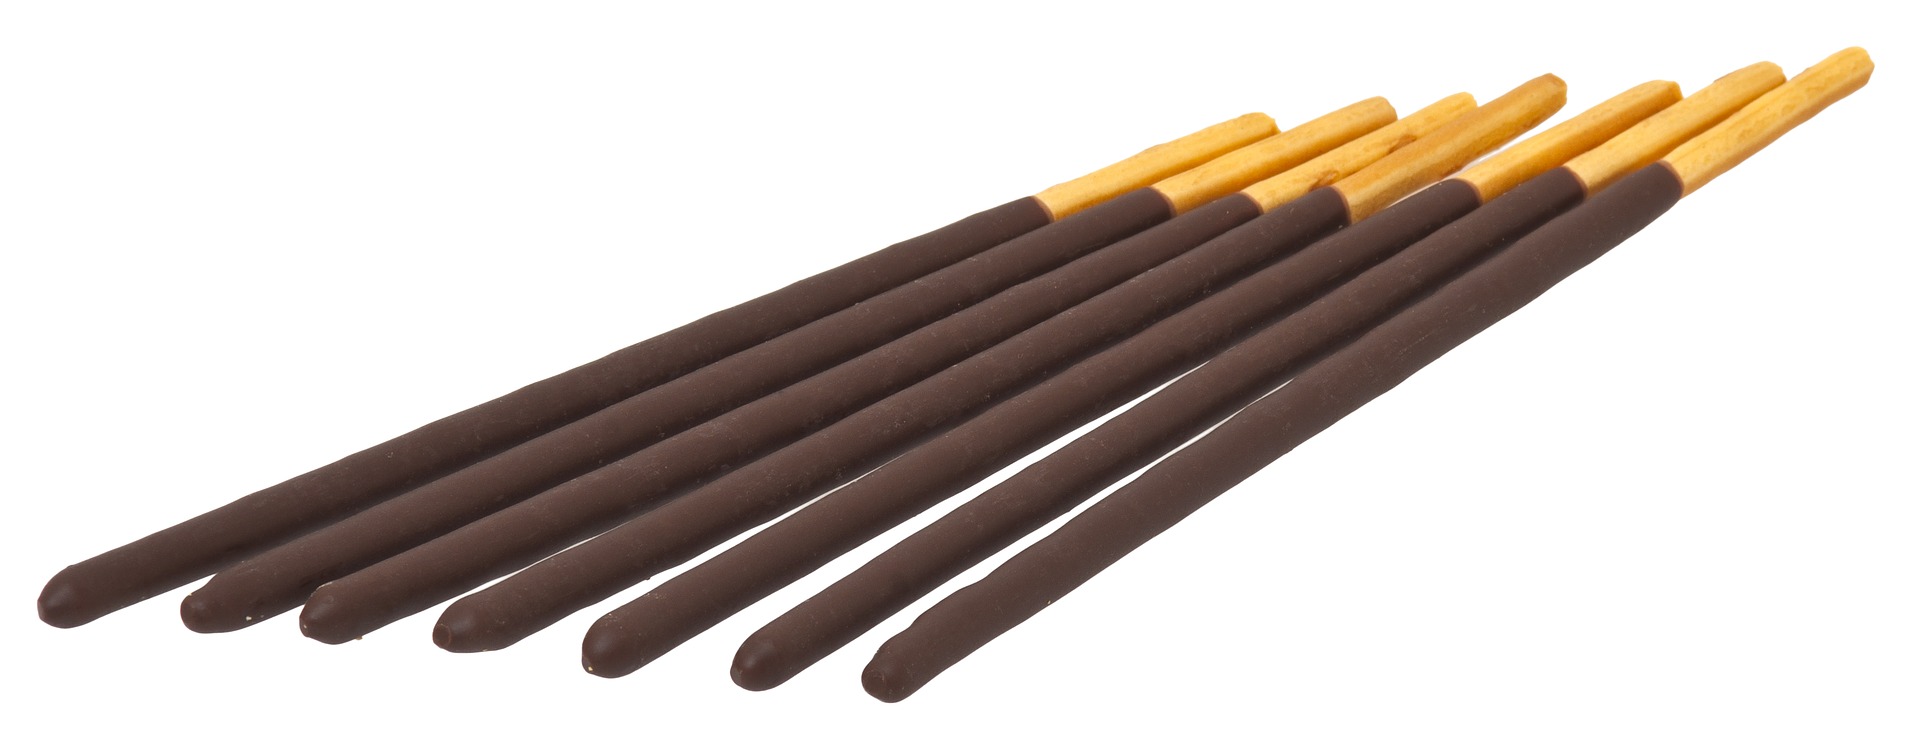 Image of a row of chocolate-dipped pocky sticks